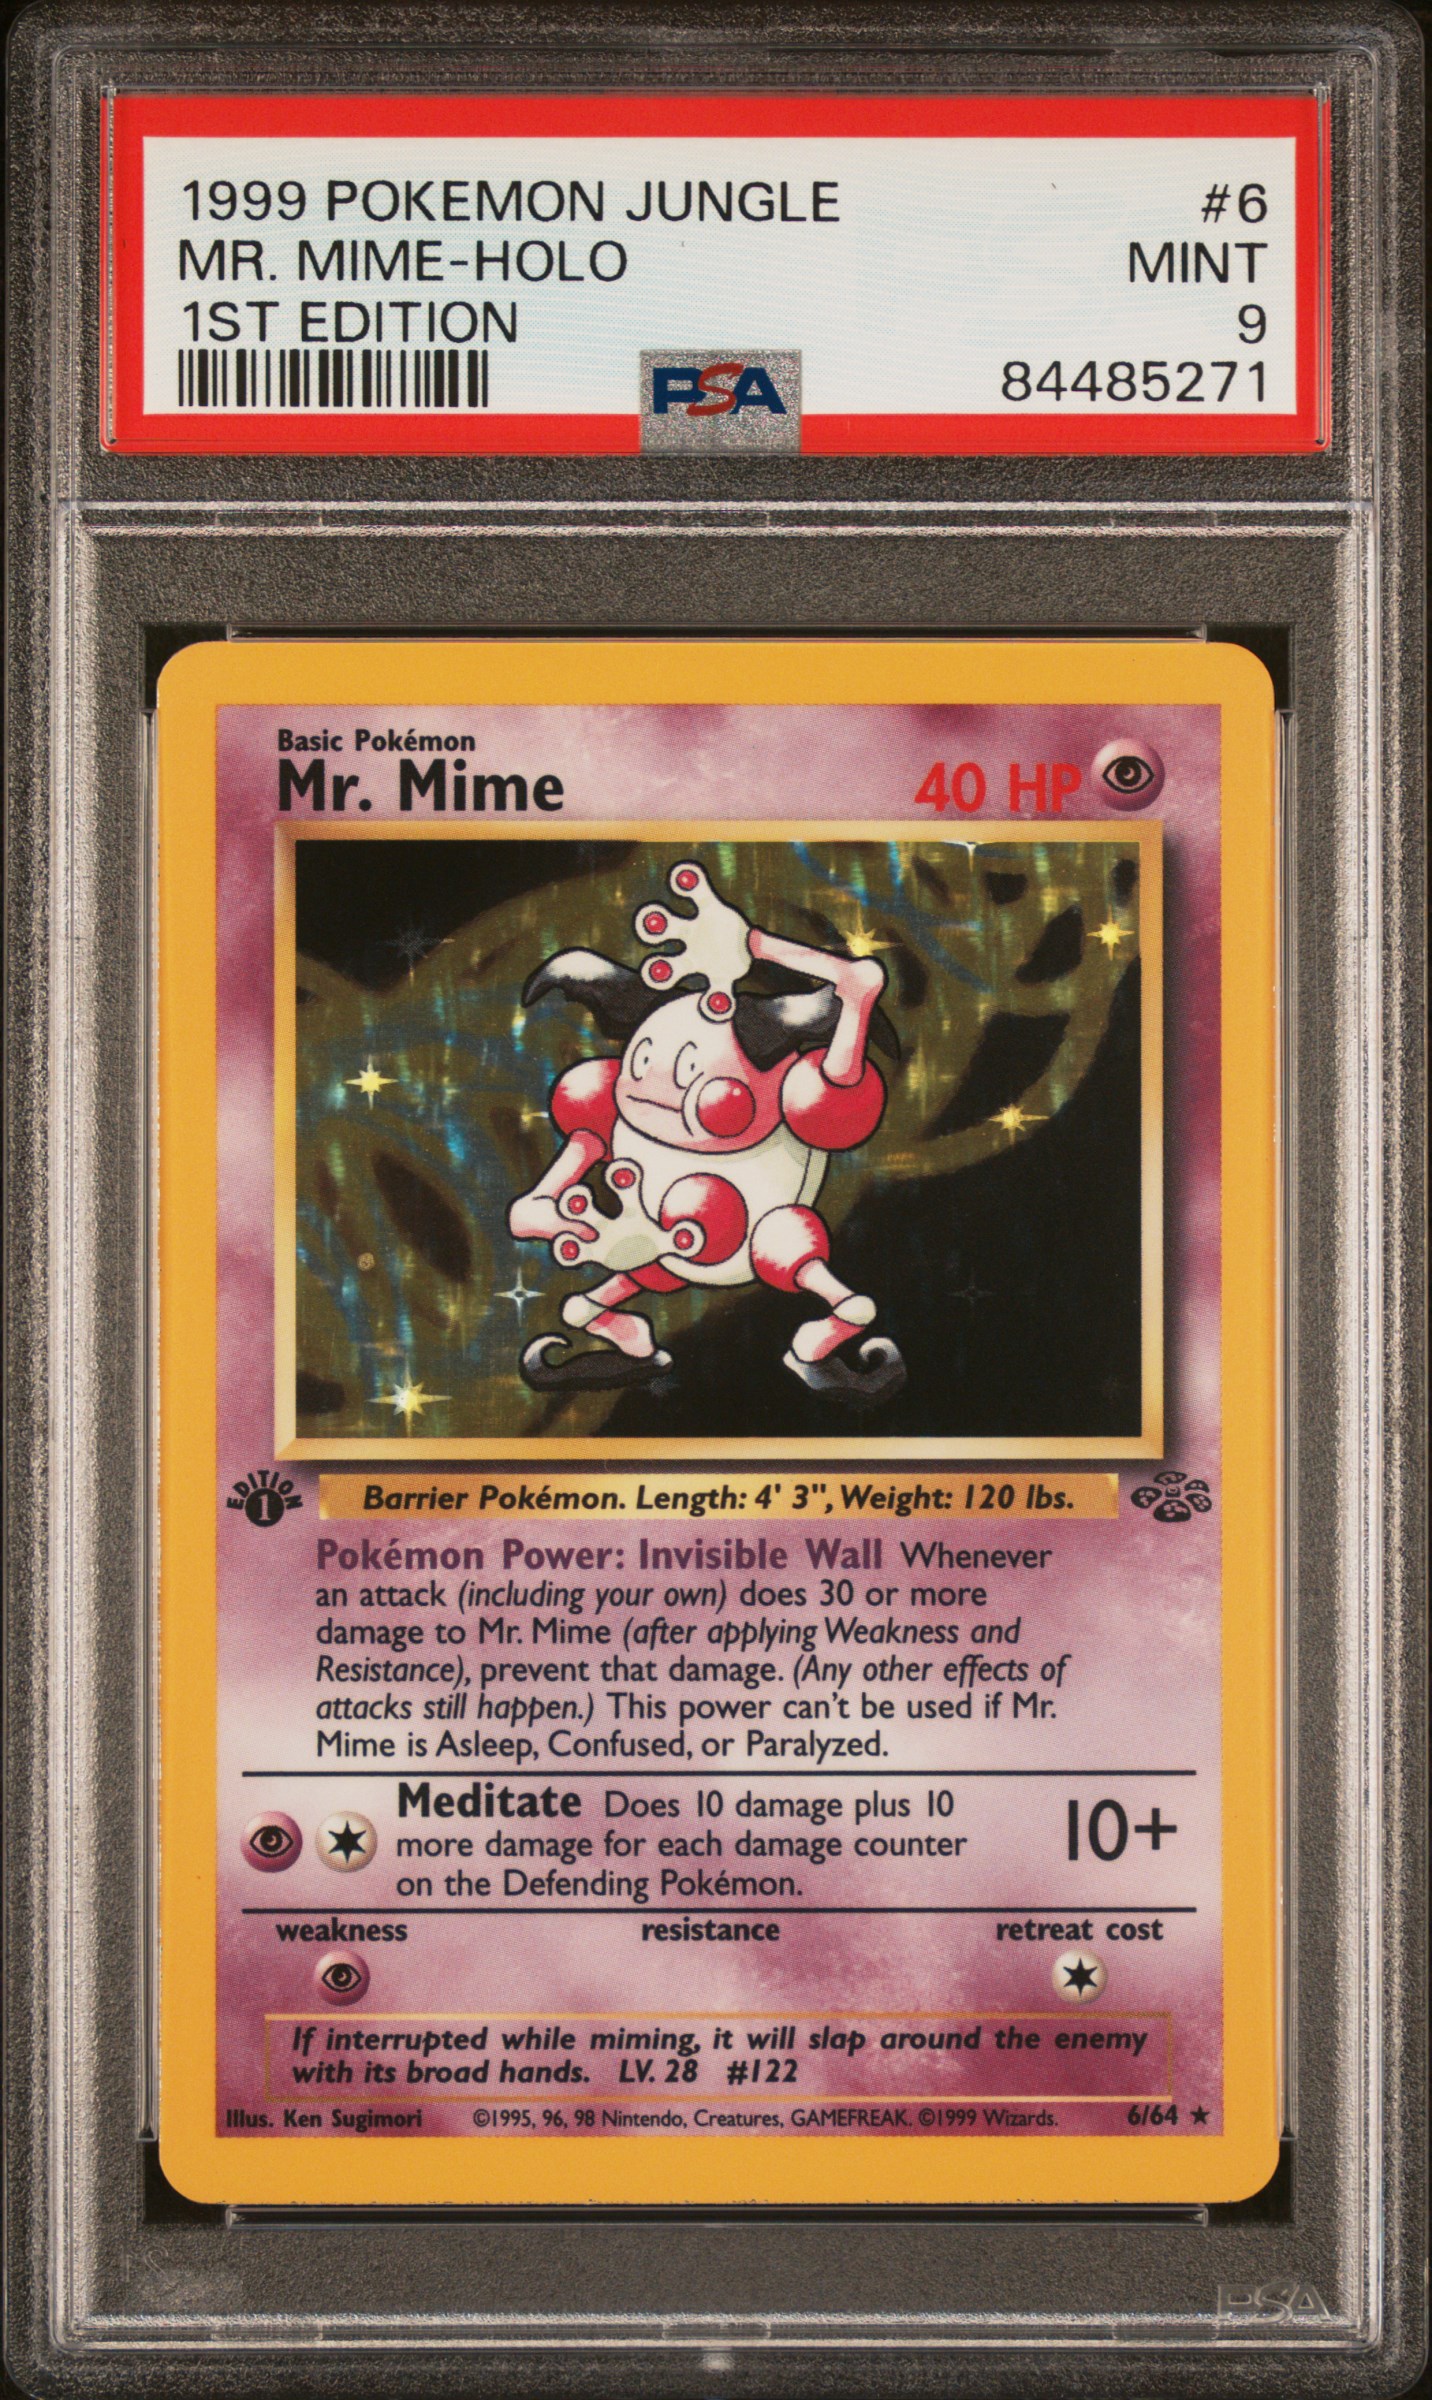 1999 Pokemon Jungle 1st Edition 6 Mr. Mime-Holo – PSA MINT 9